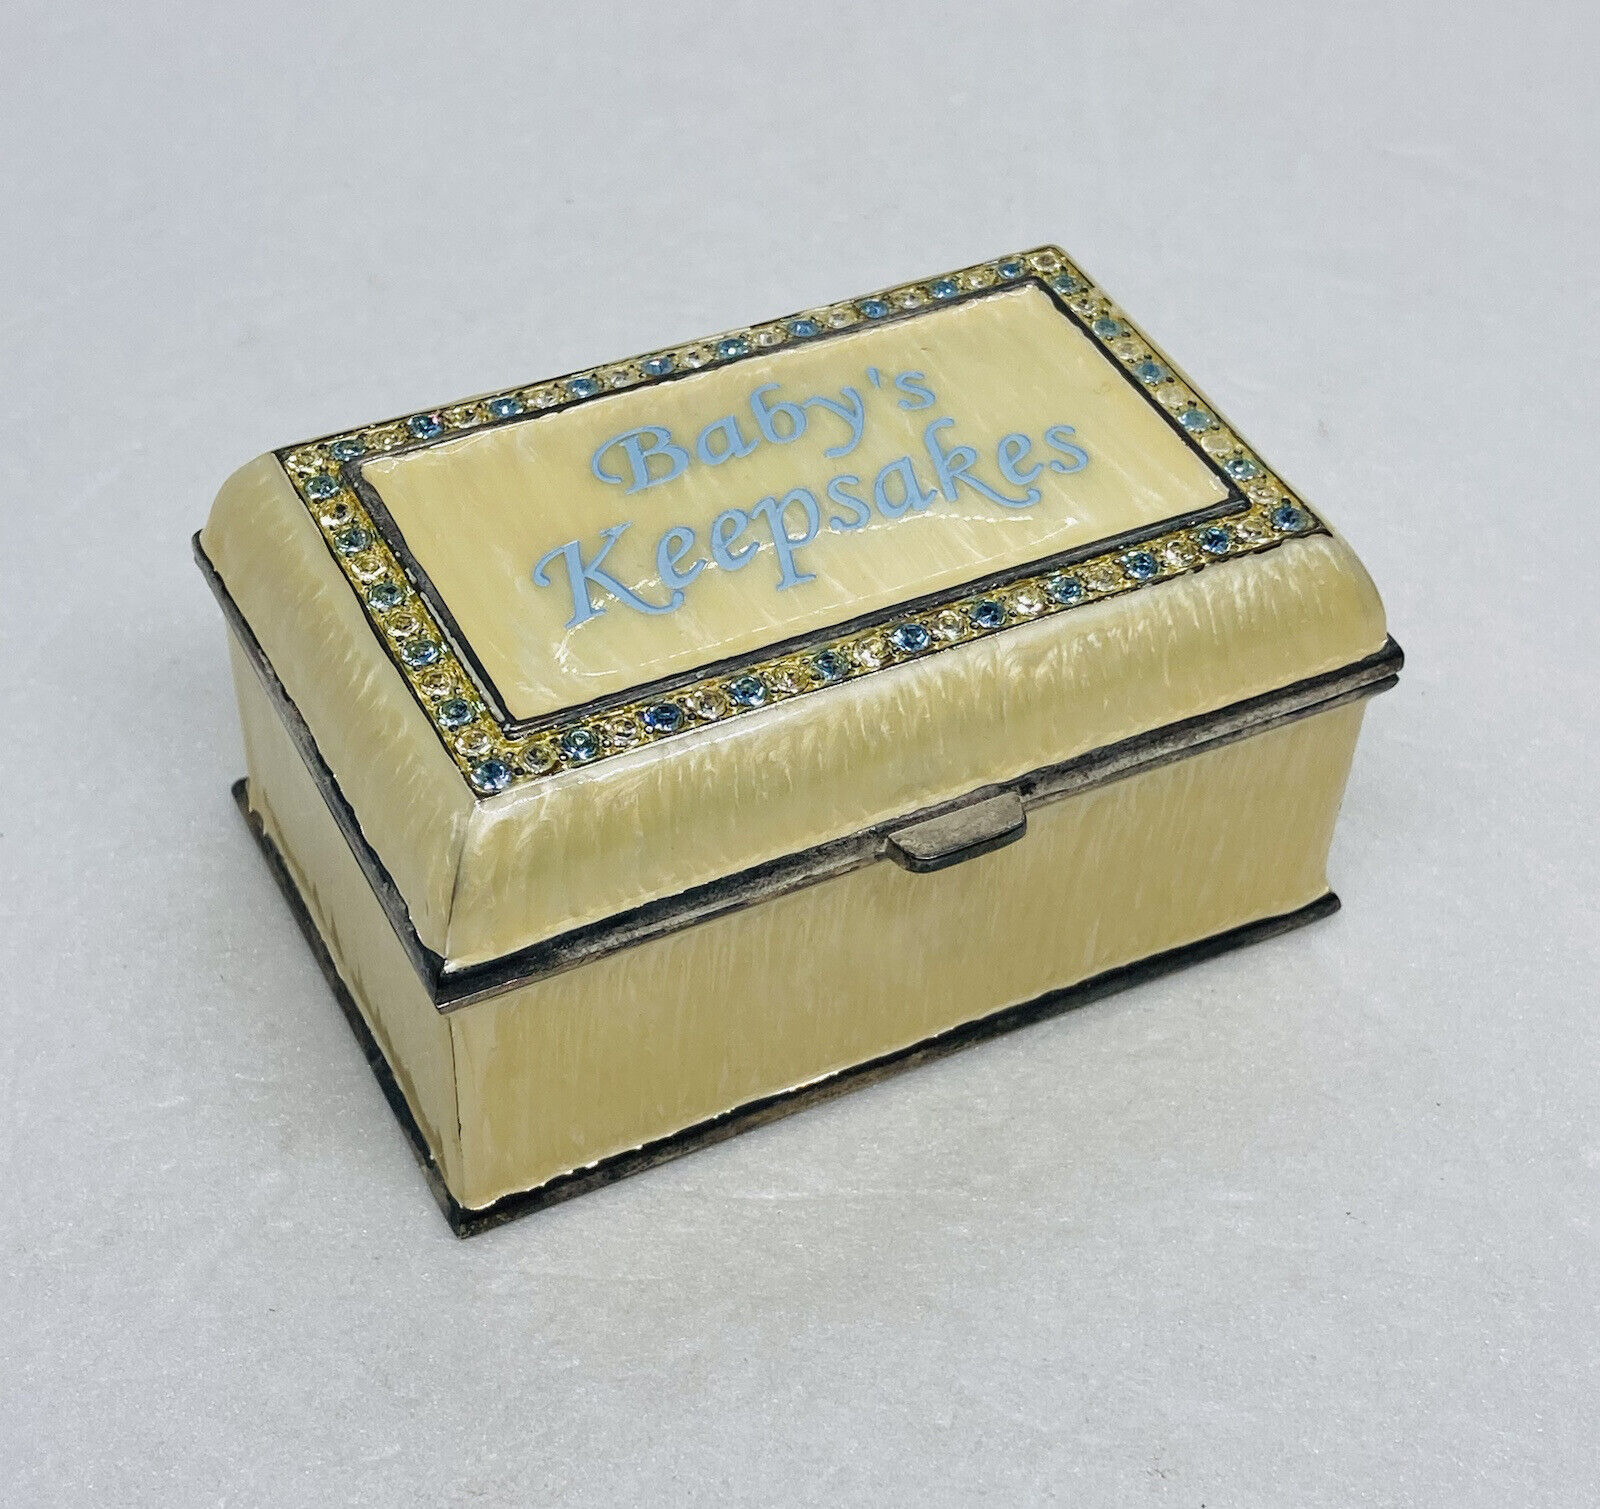 Vintage Enamel Rhinestones Trinket Box “Baby’s Keepsake” Treasure Chest Decor 35